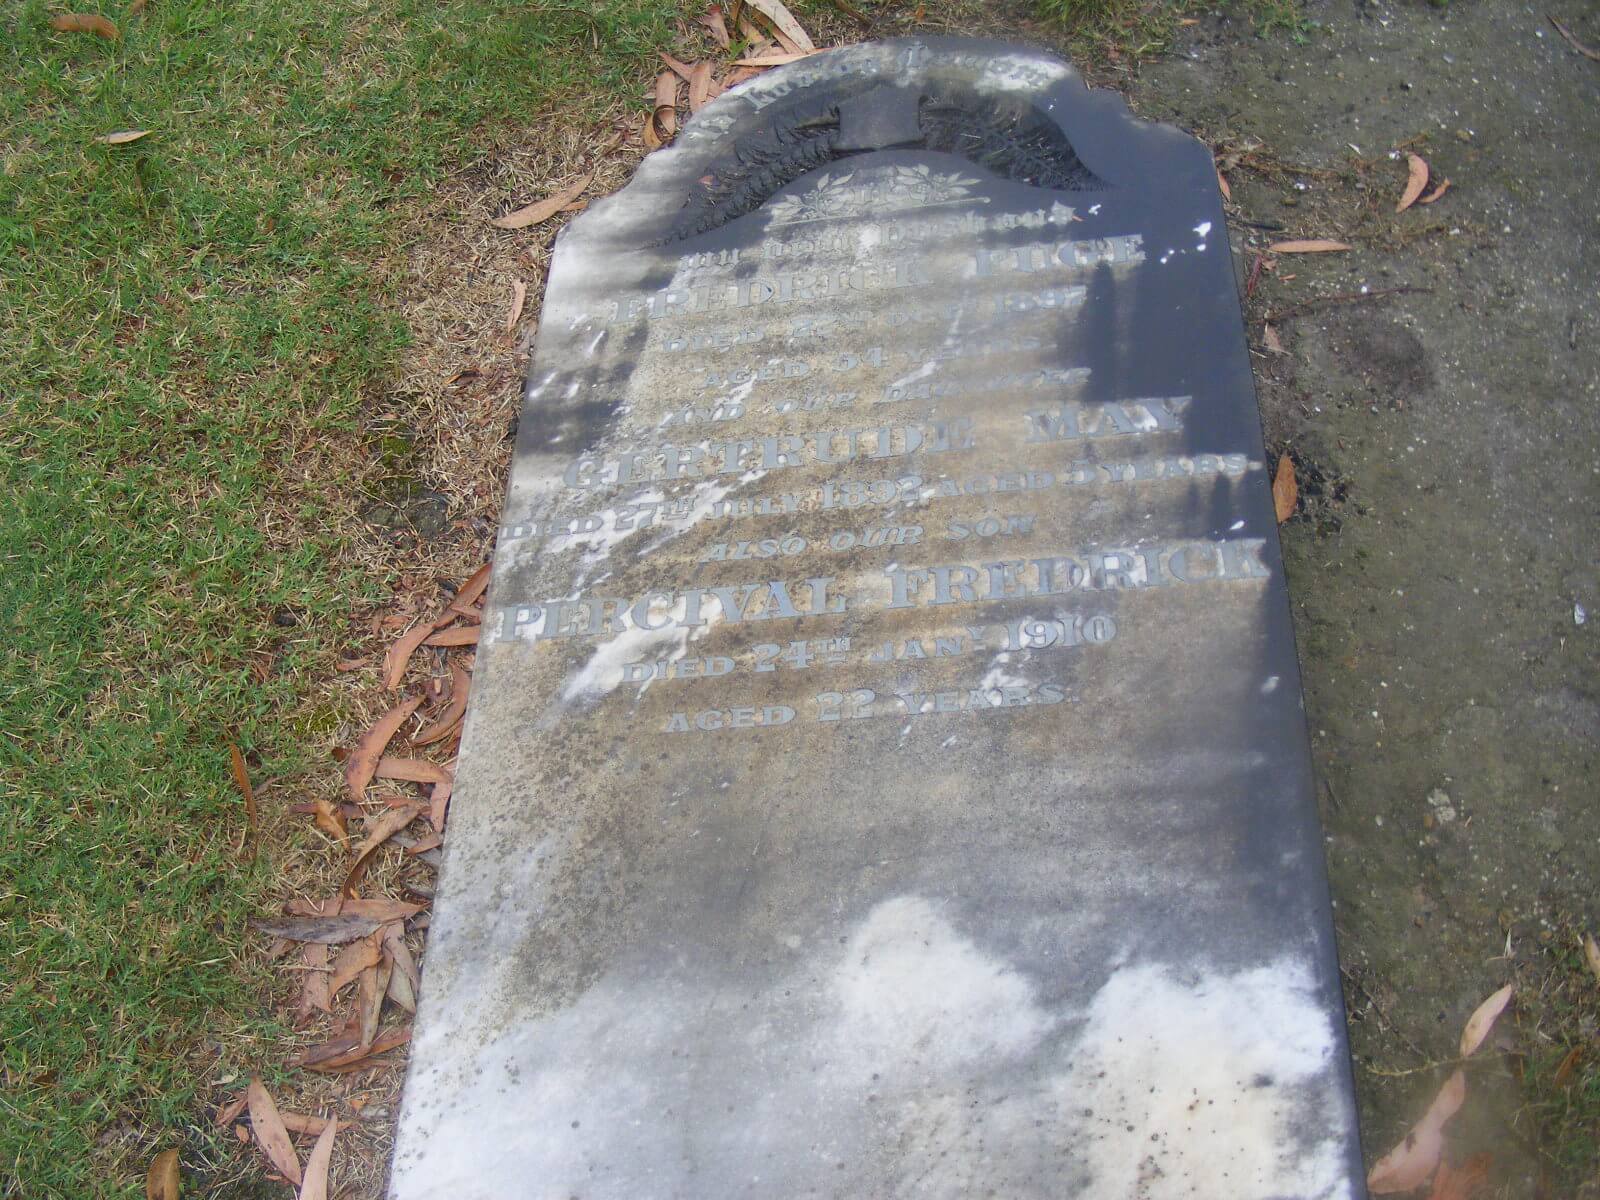 Large headstone lying on the ground.